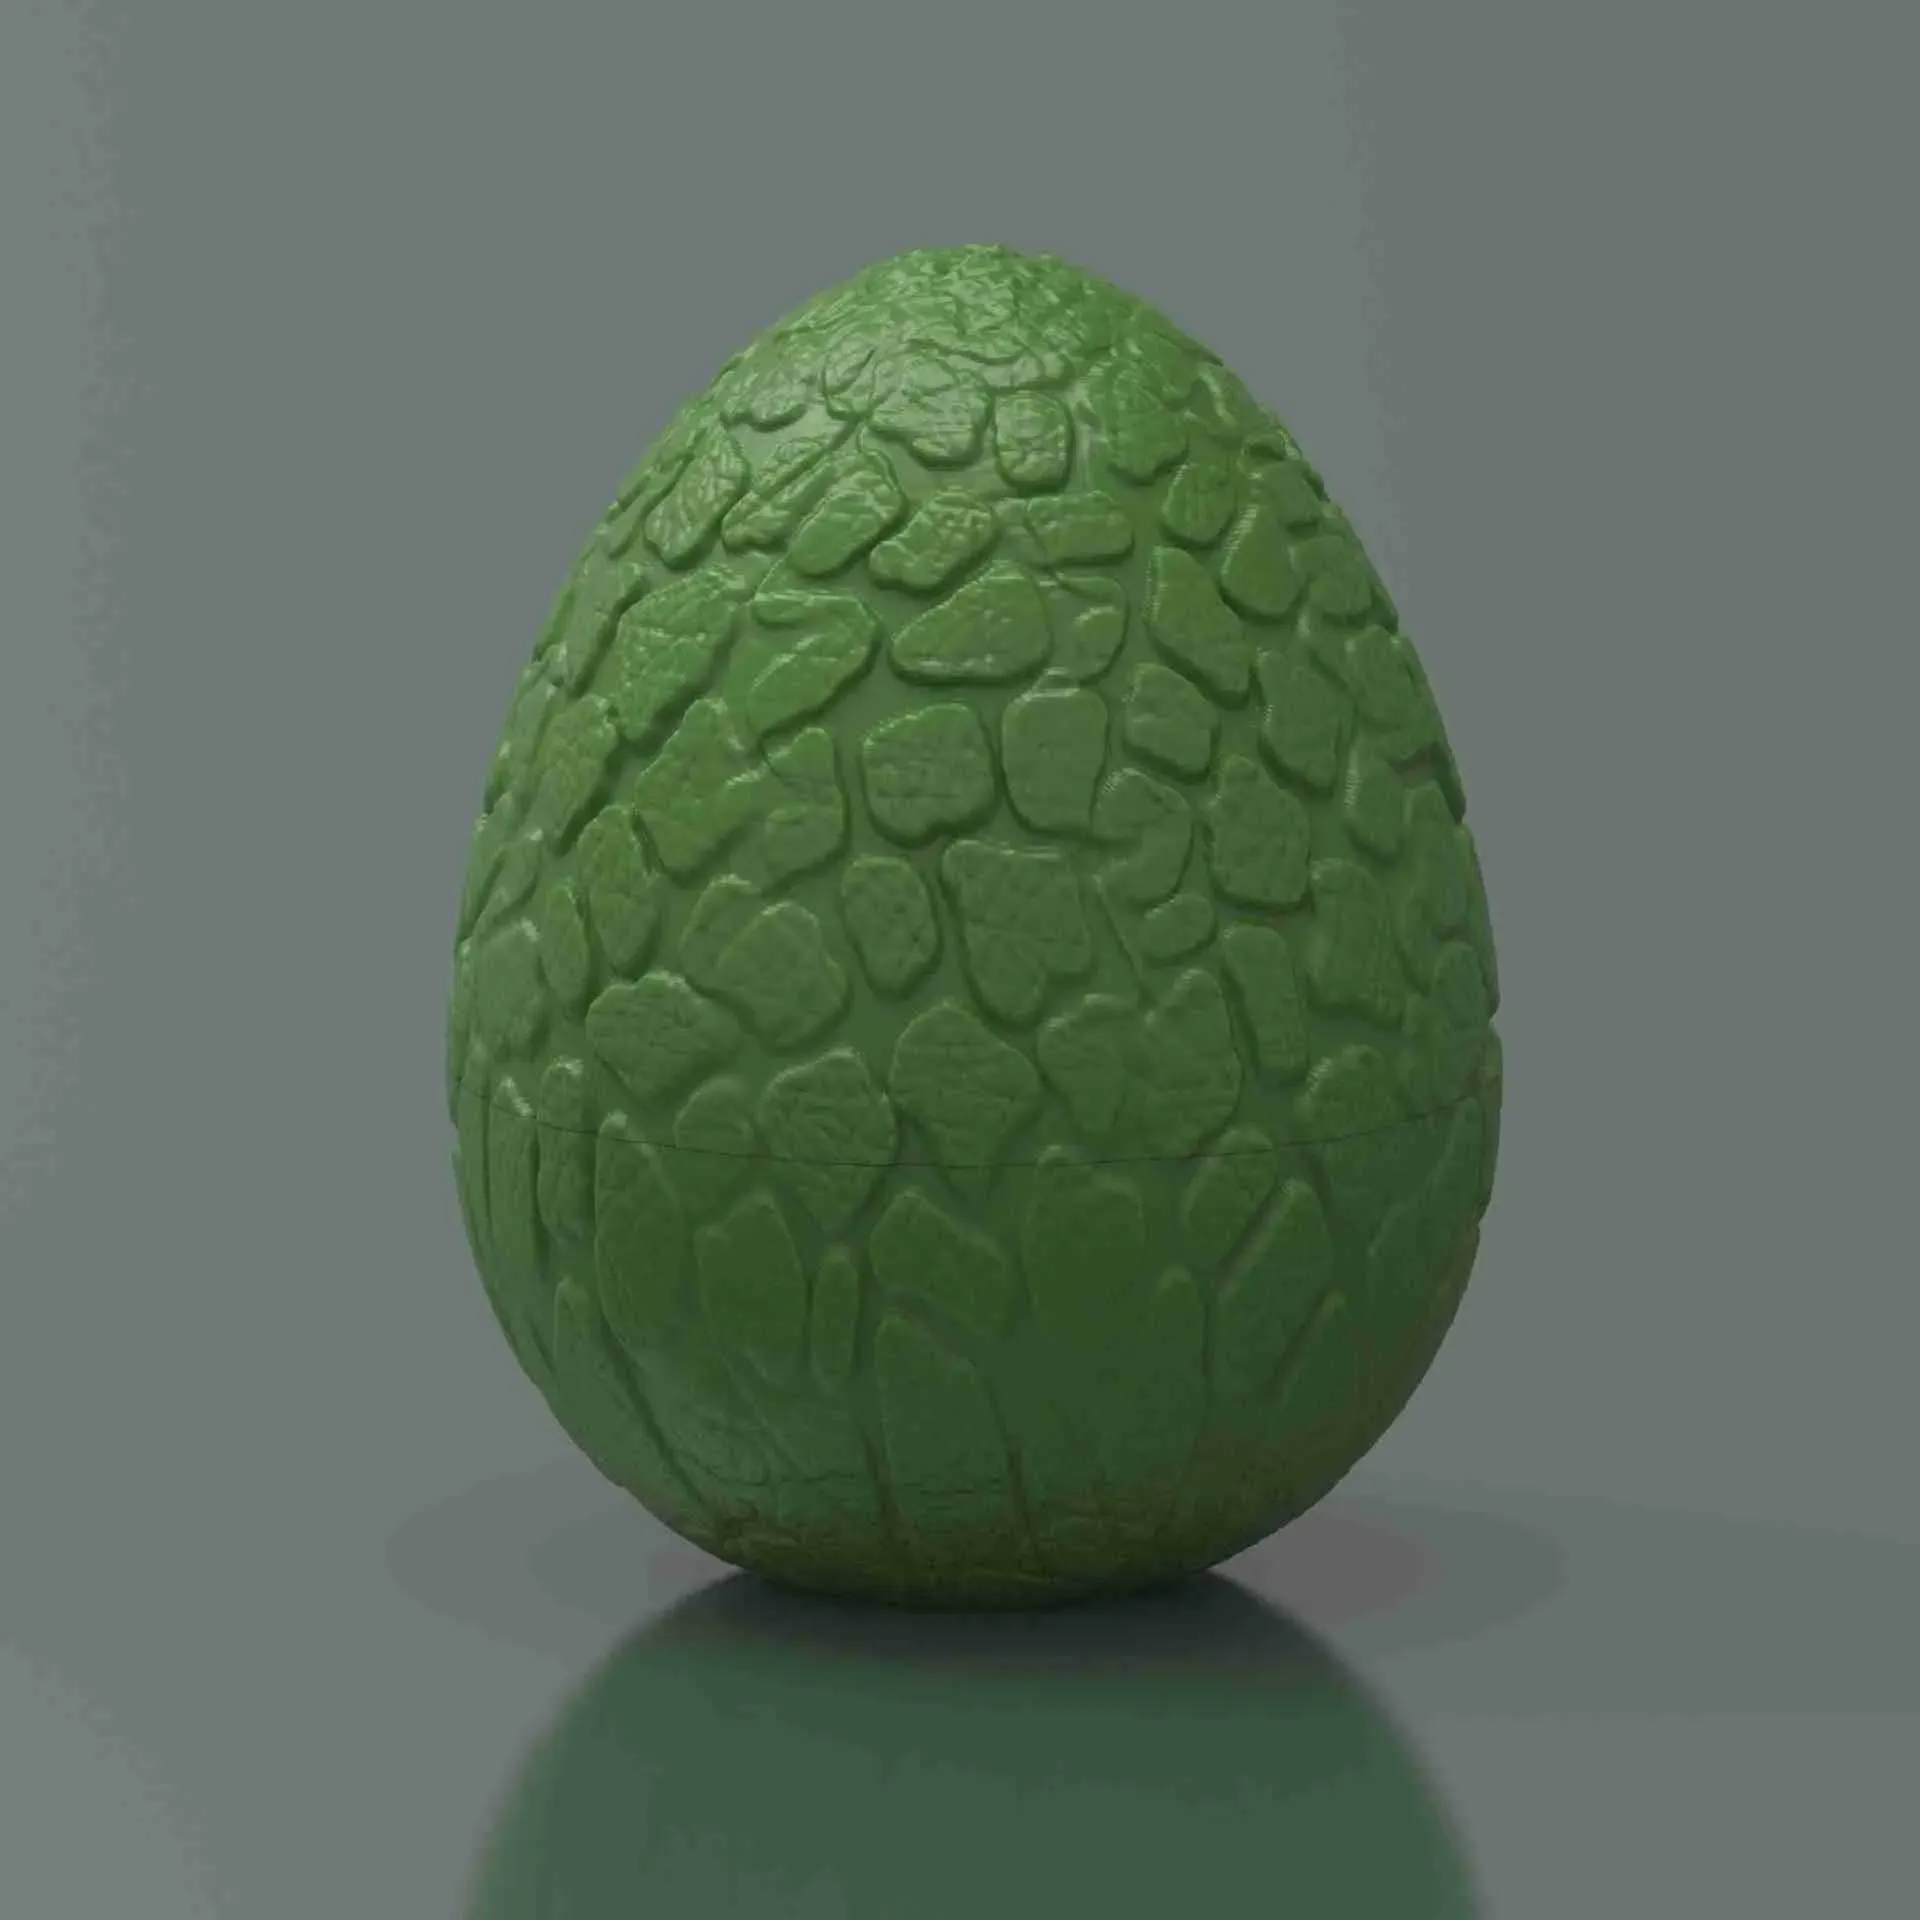 4 Dragon Eggs Set 2 - Stl files for 3D printing